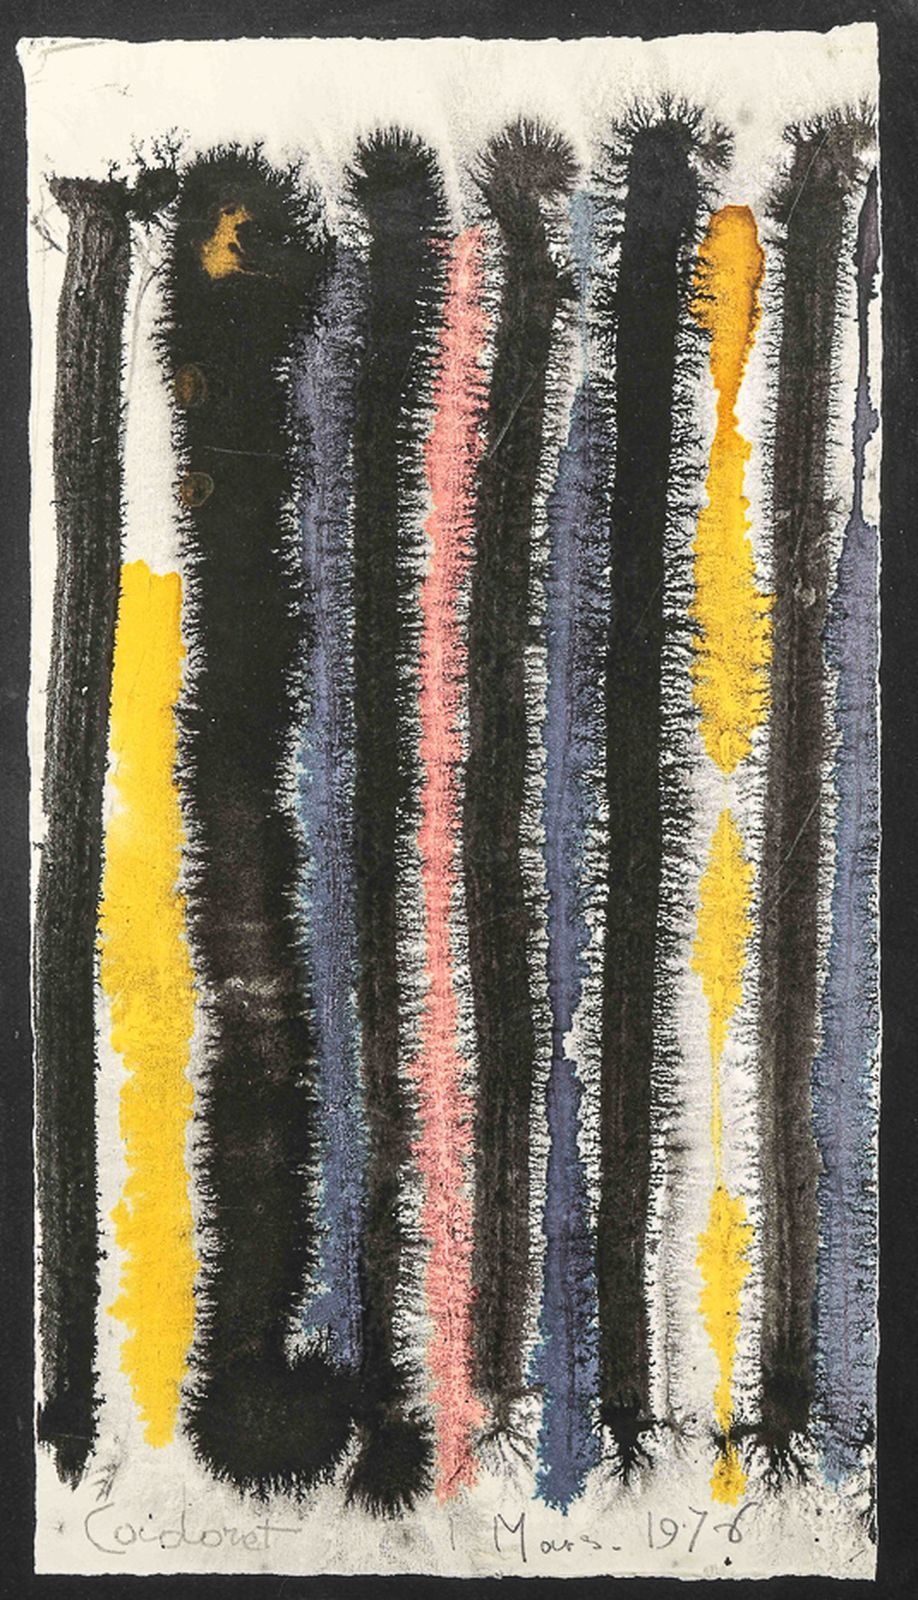 Null 
米歇尔-卡多雷(1912-1985)

"BOUGY", 1976年

纸上水墨画，左下有签名，右下有签名

41 x 22 cm